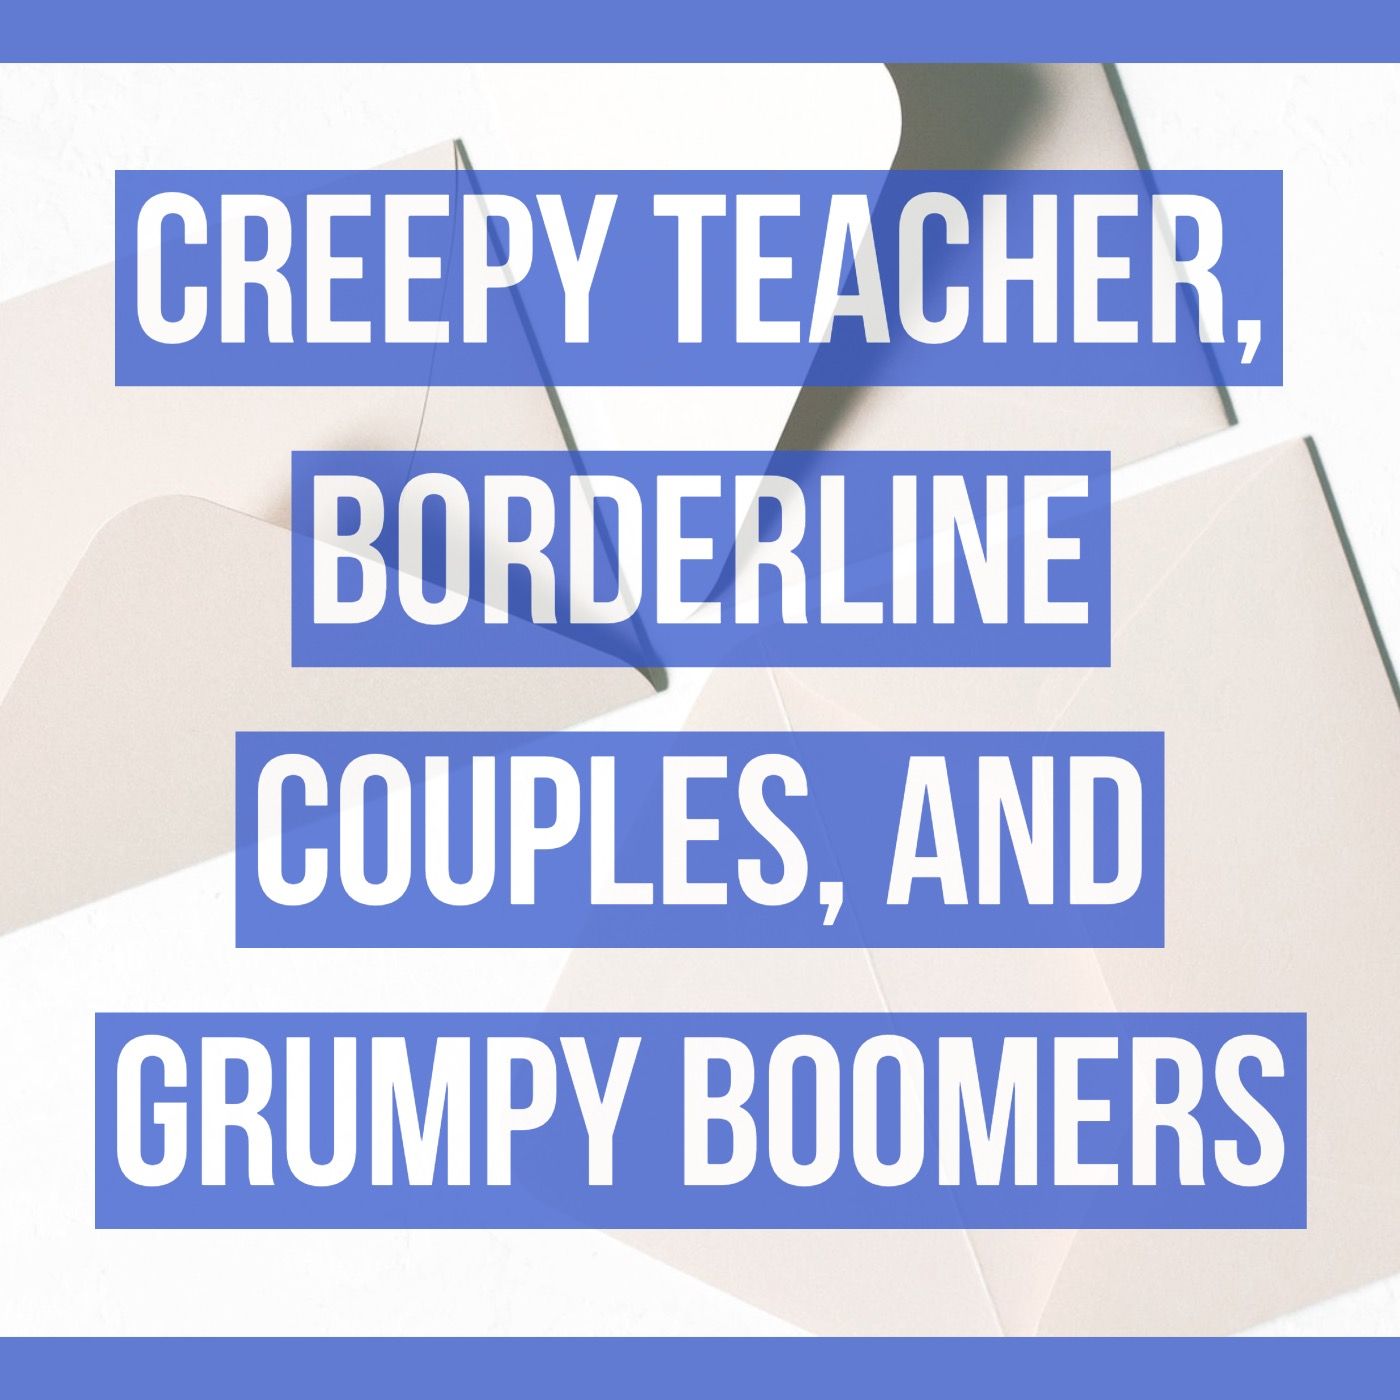 Creepy teacher, borderline couples, and grumpy boomers